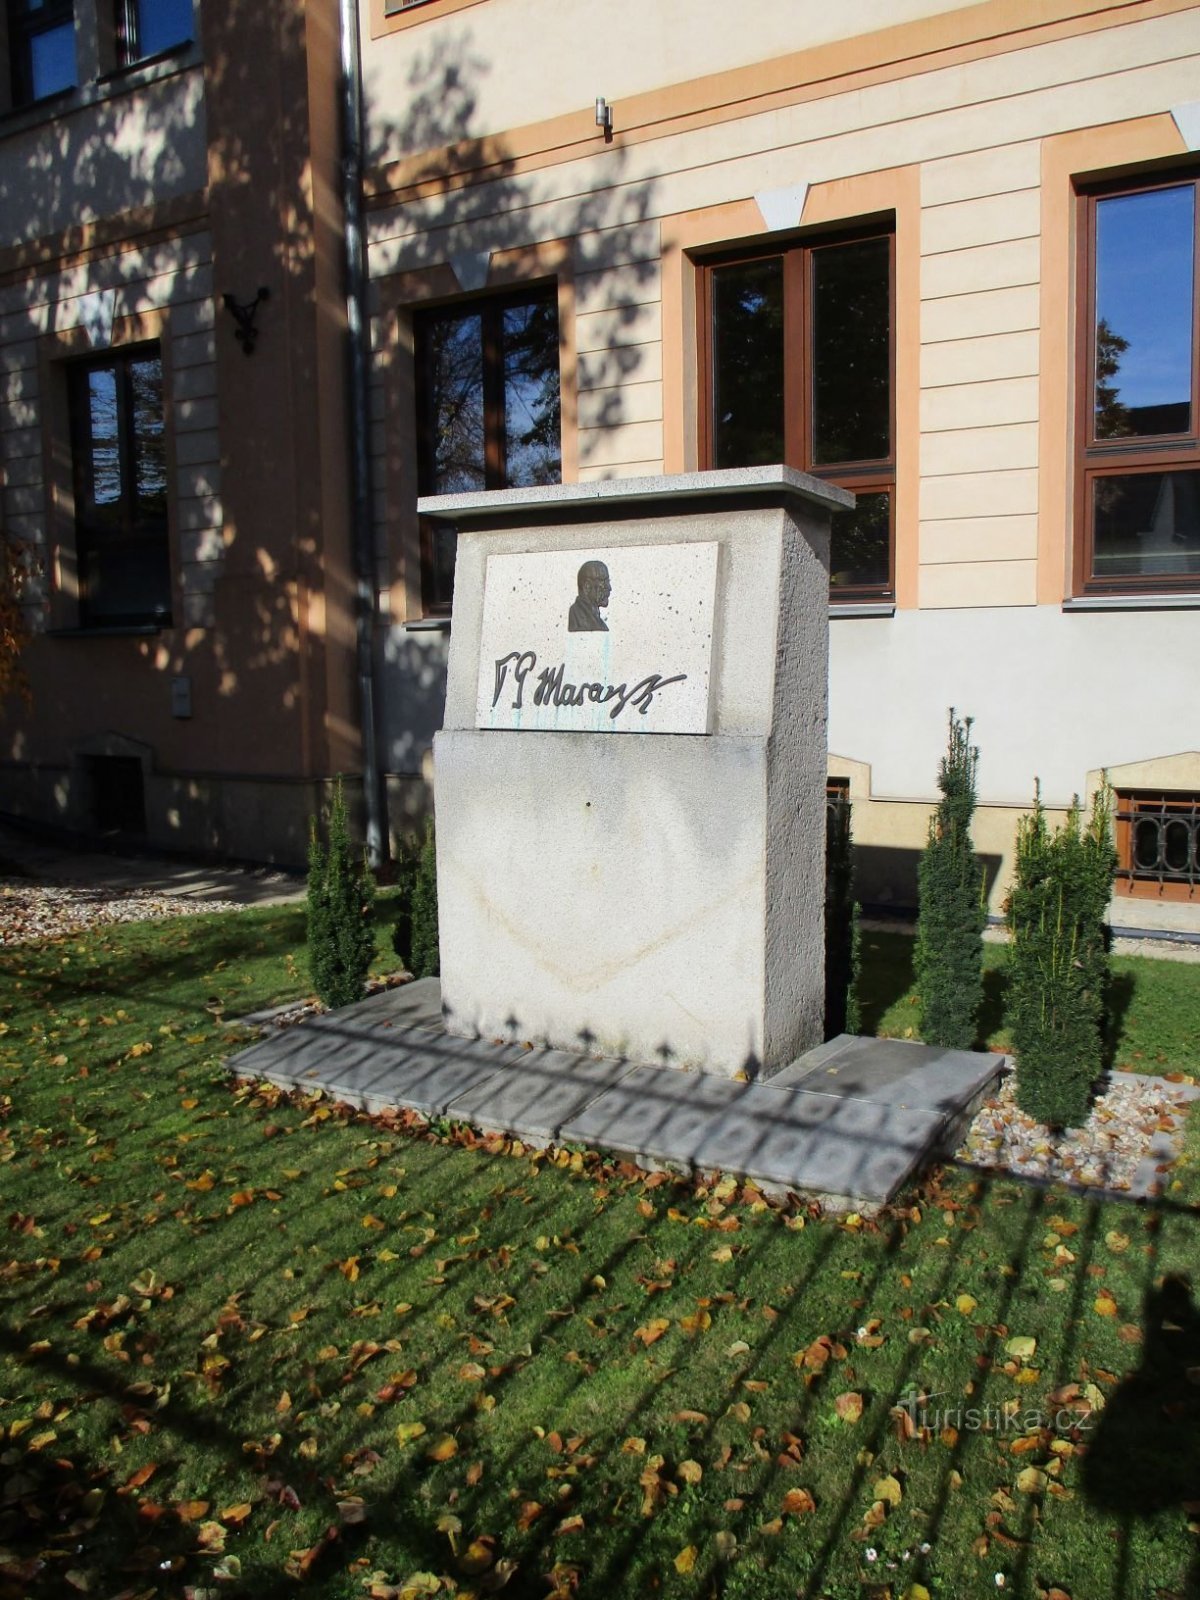 Spomenik osvoboditve pred osnovno šolo na ulici Úprková (Hradec Králové, 28.10.2020. oktober XNUMX)